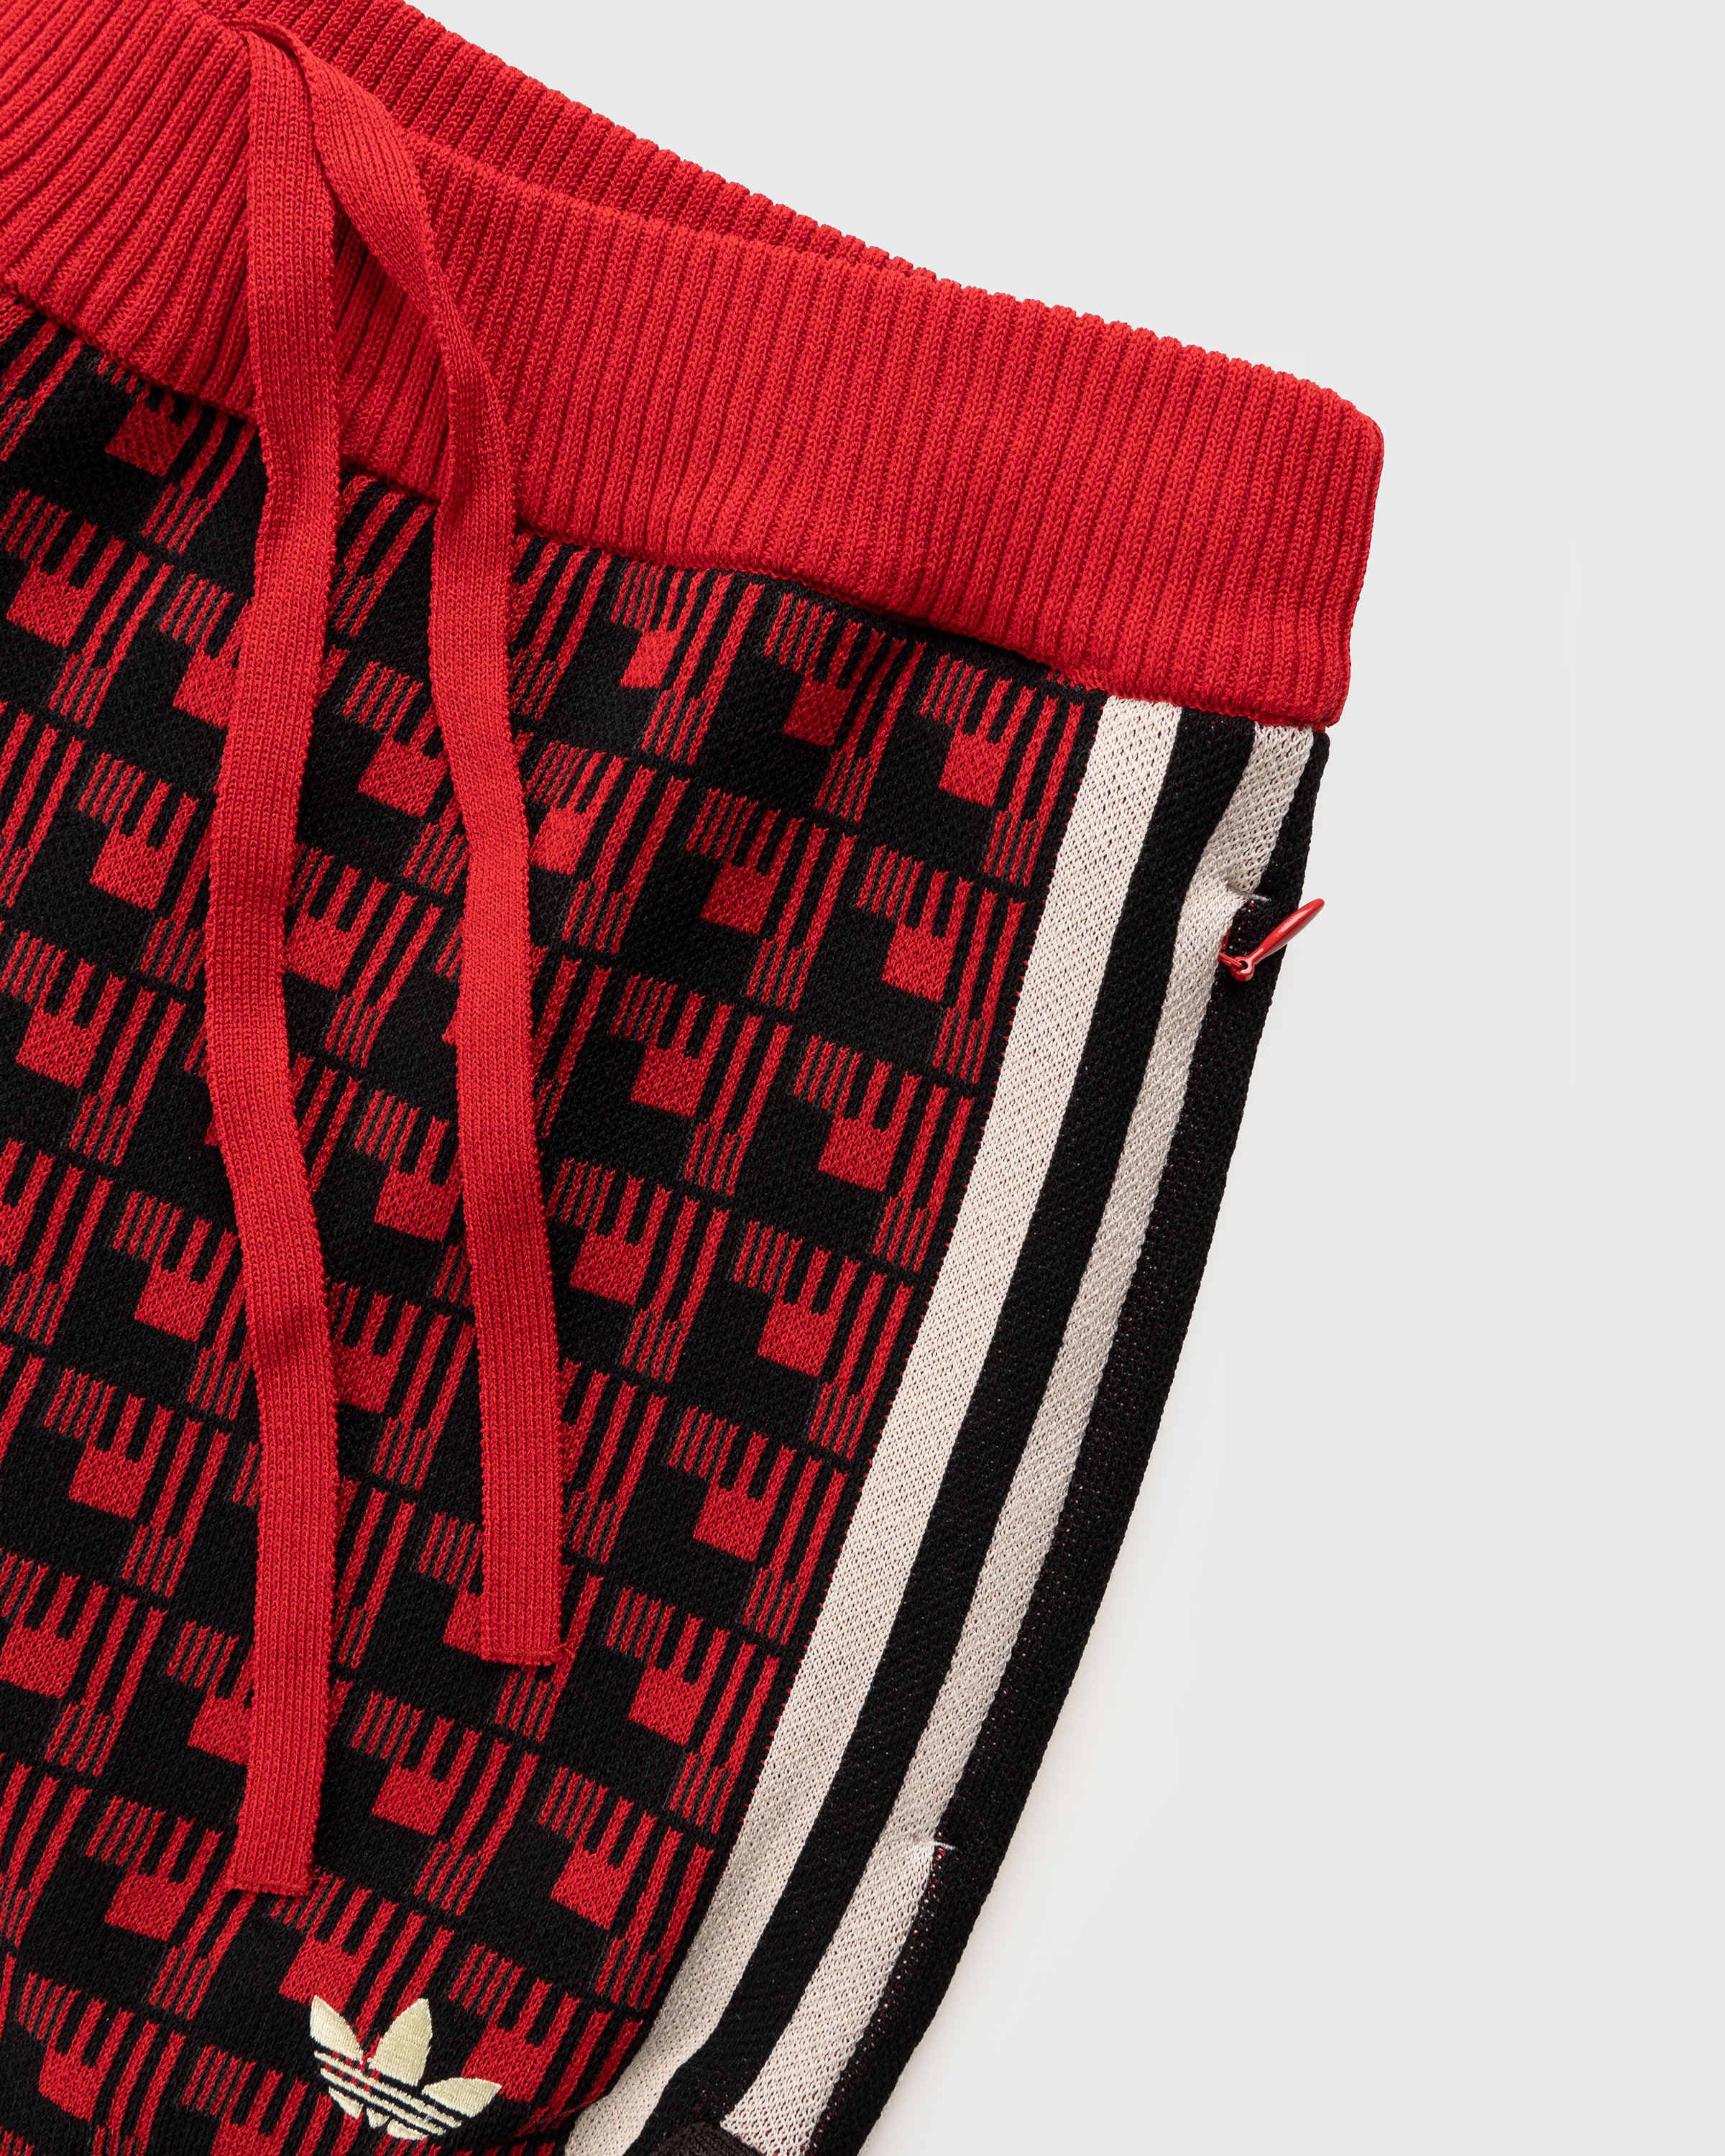 Adidas x Wales Bonner - WB Knit Shorts Scarlet/Black - Clothing - Red - Image 5